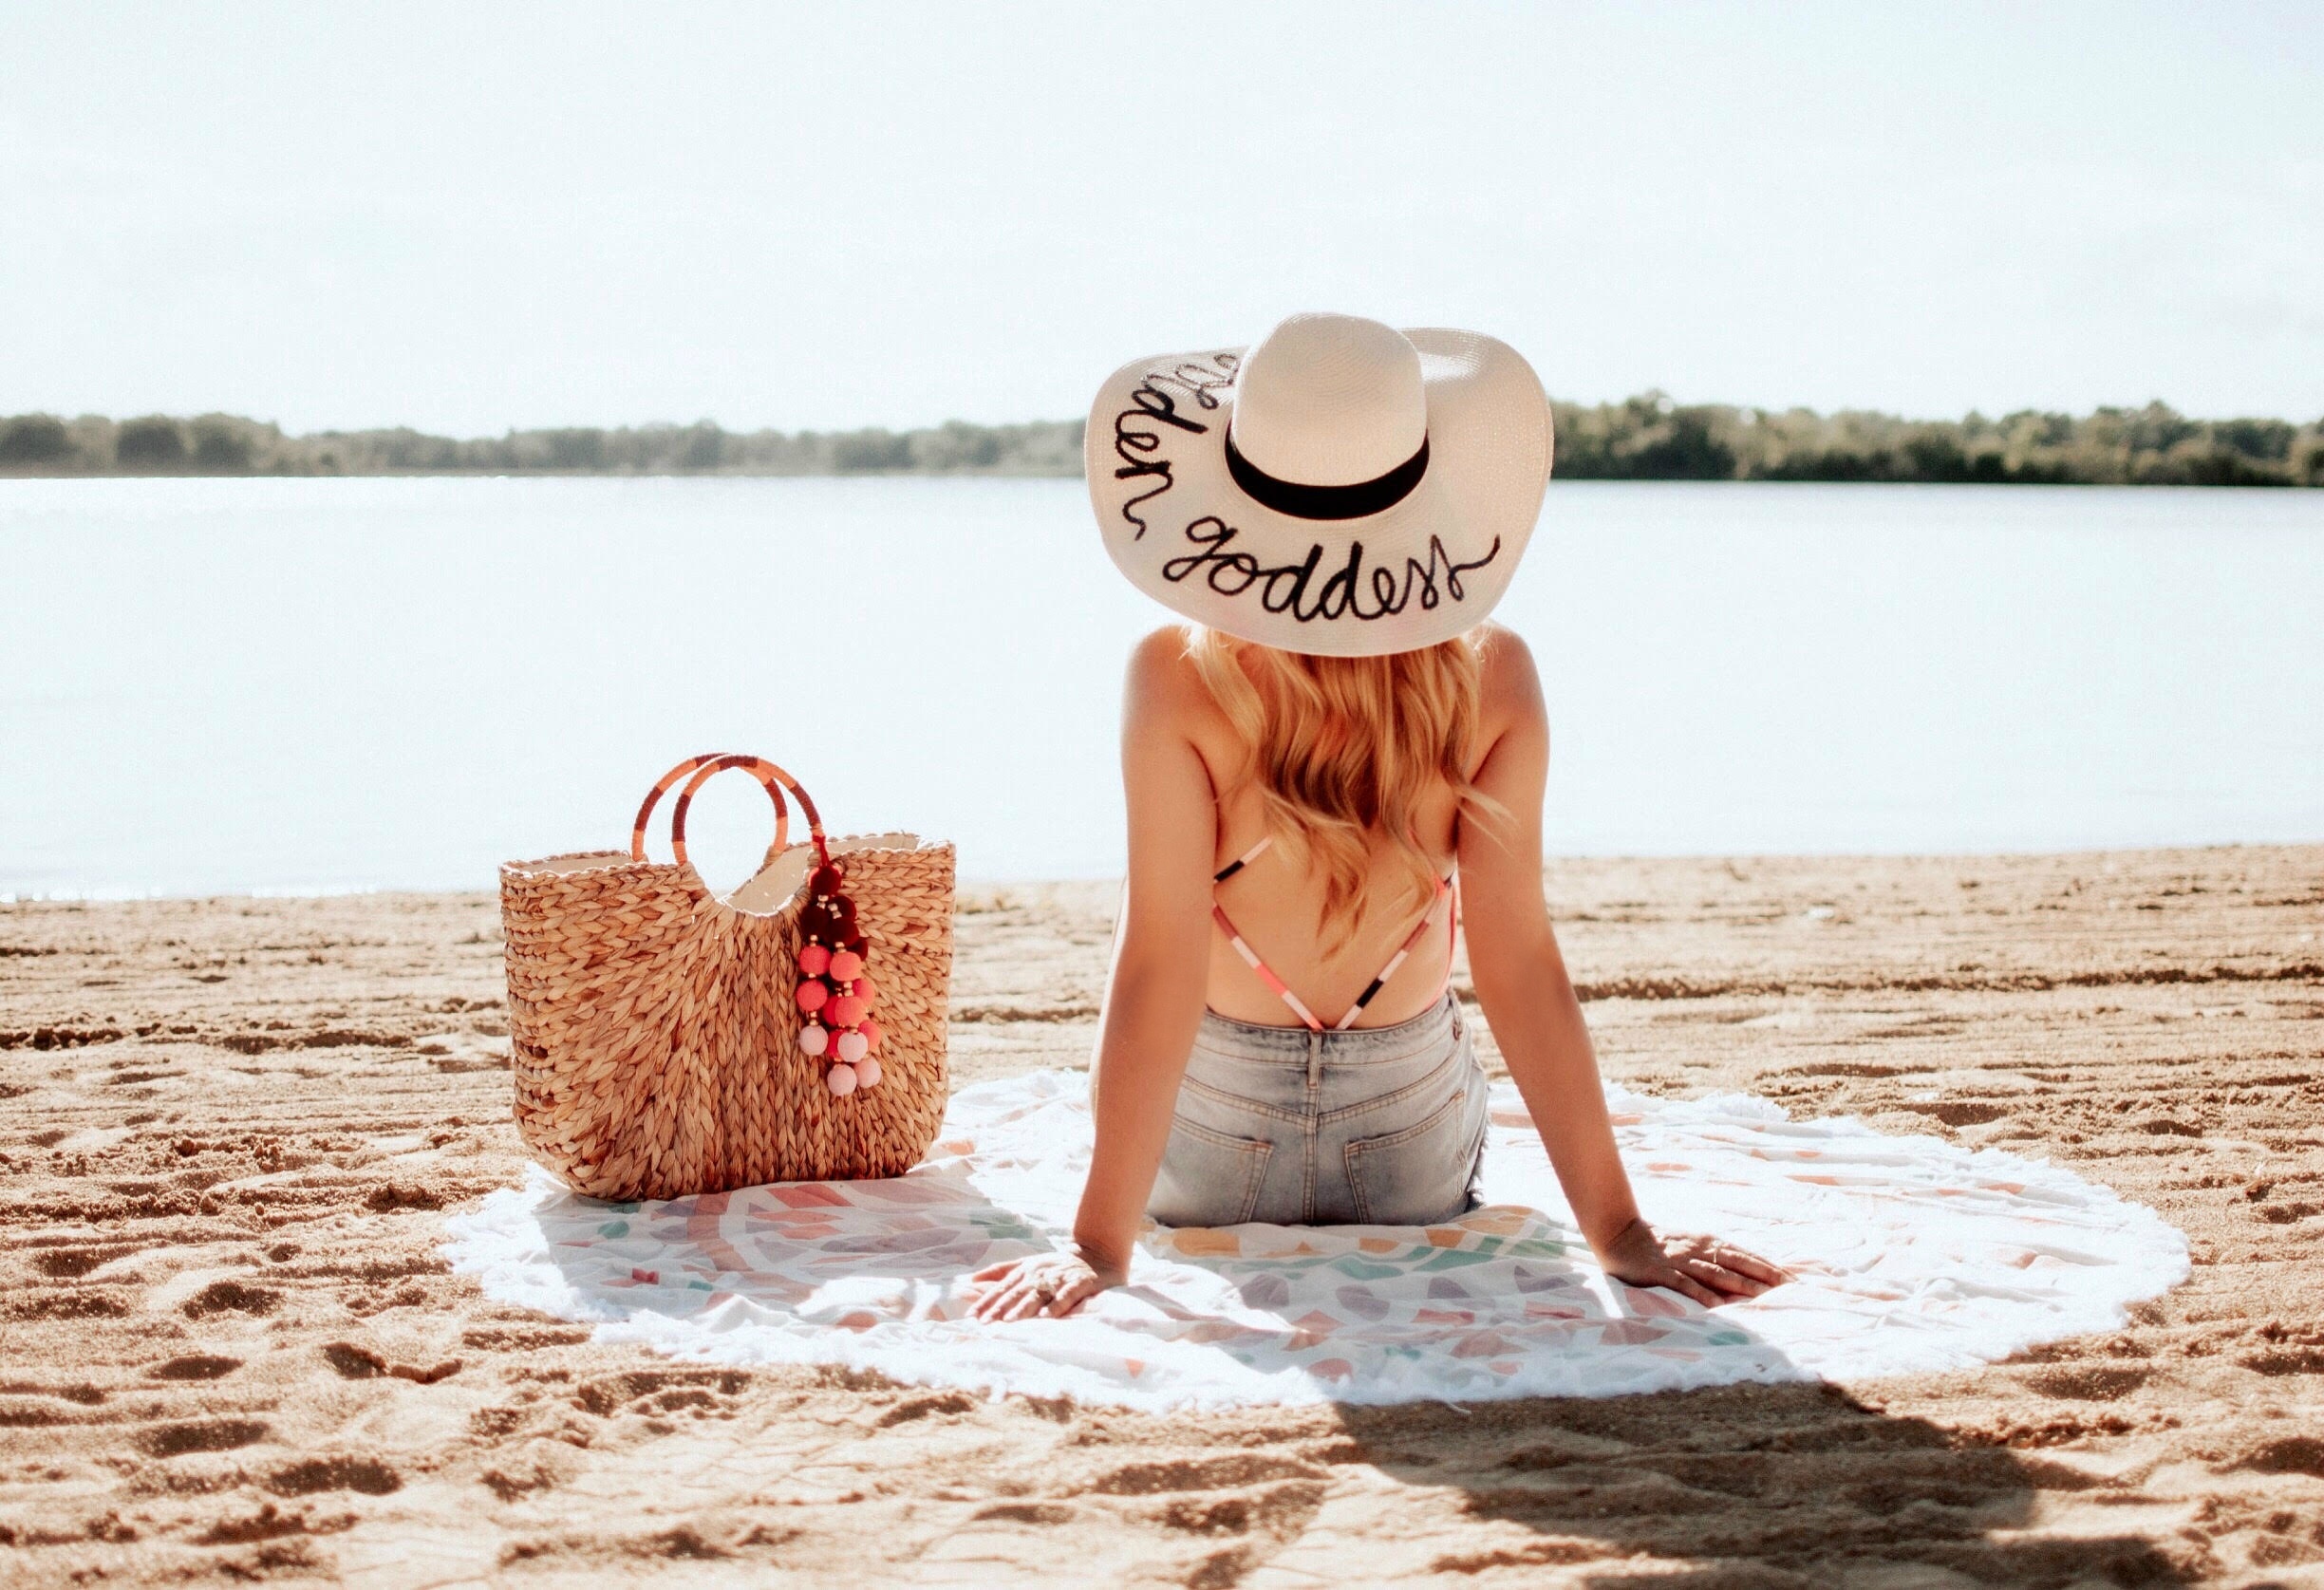  Summer-Hair-Care-Beach-bag-Hair-Cuttery-Cibu-Vanessa-Lambert-What-Would-V-Wear-blogger